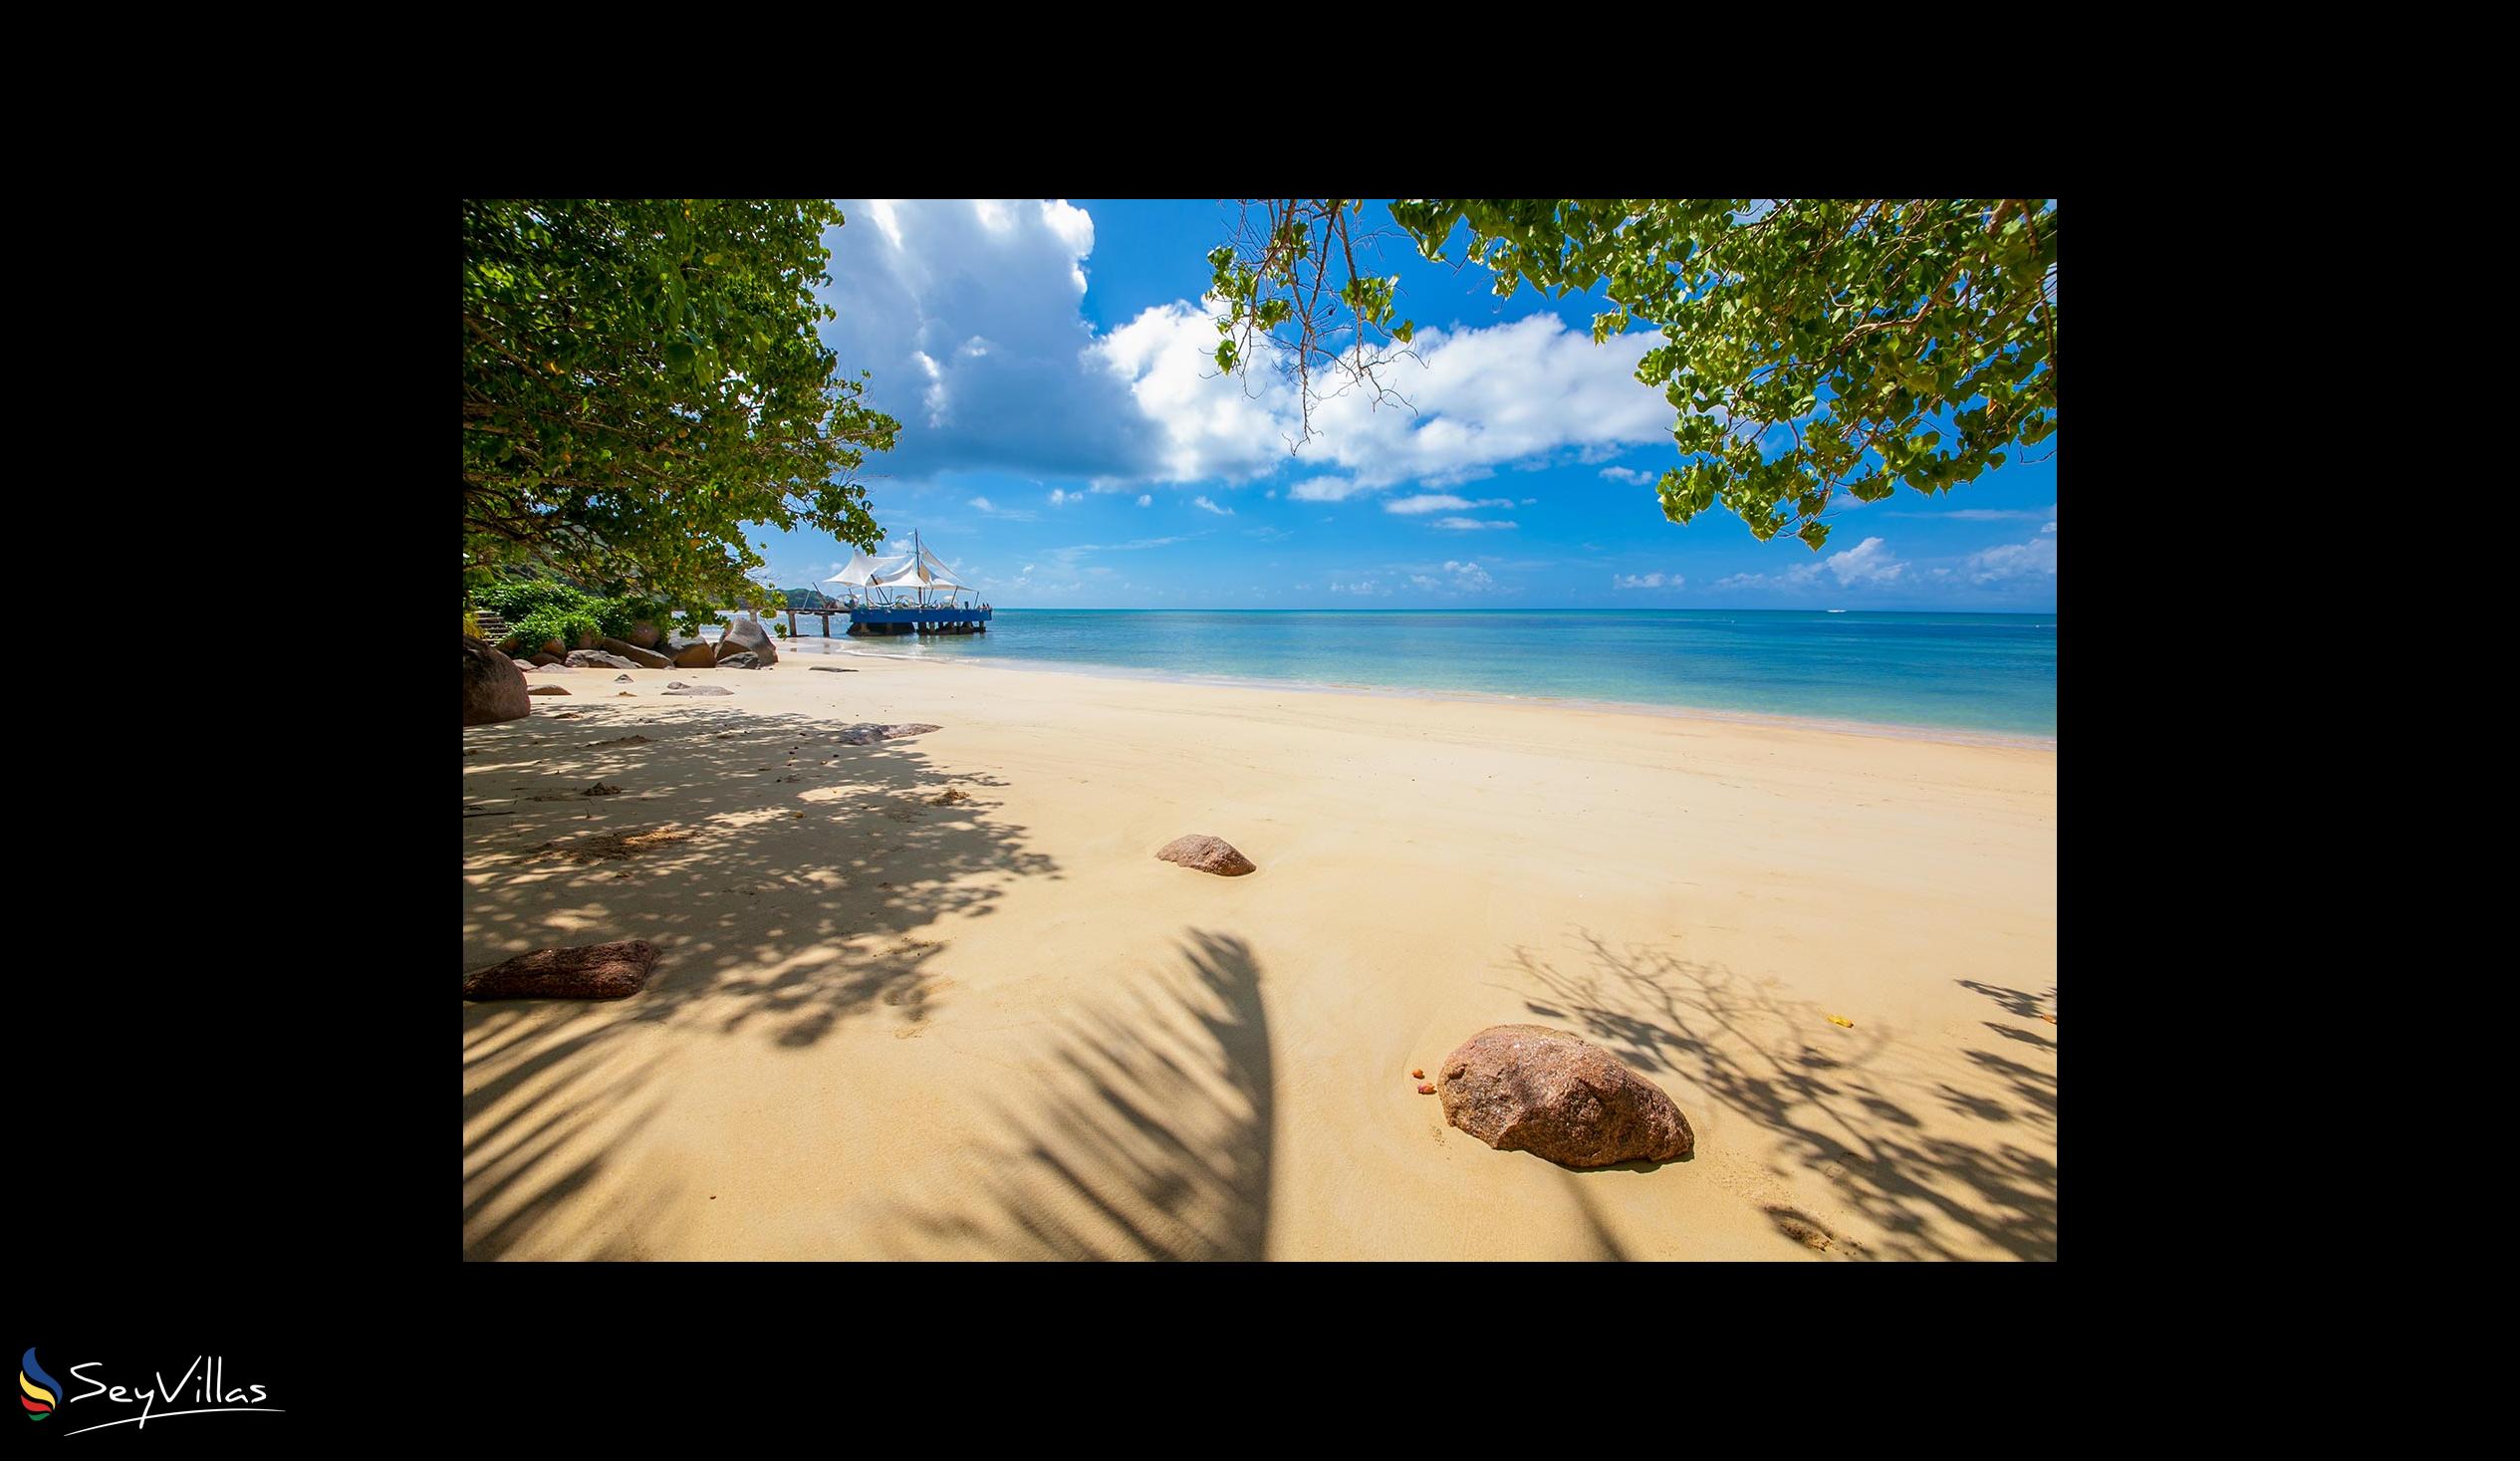 Foto 44: Coco de Mer & Black Parrot Suites - Strände - Praslin (Seychellen)